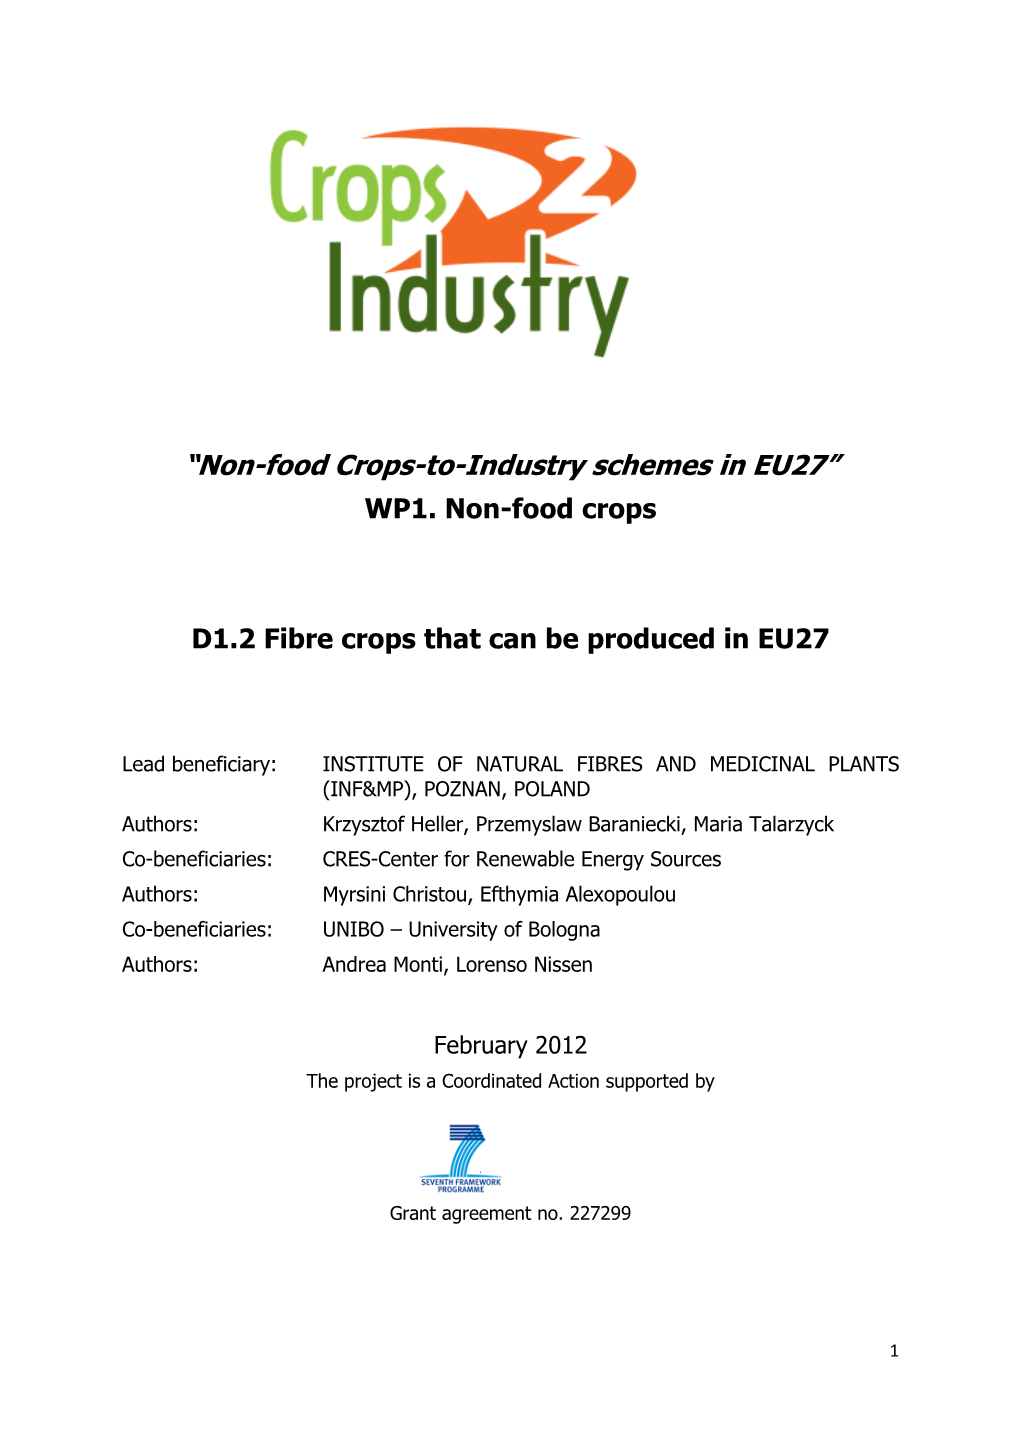 Fibre Crops That Can Be Produced in EU27